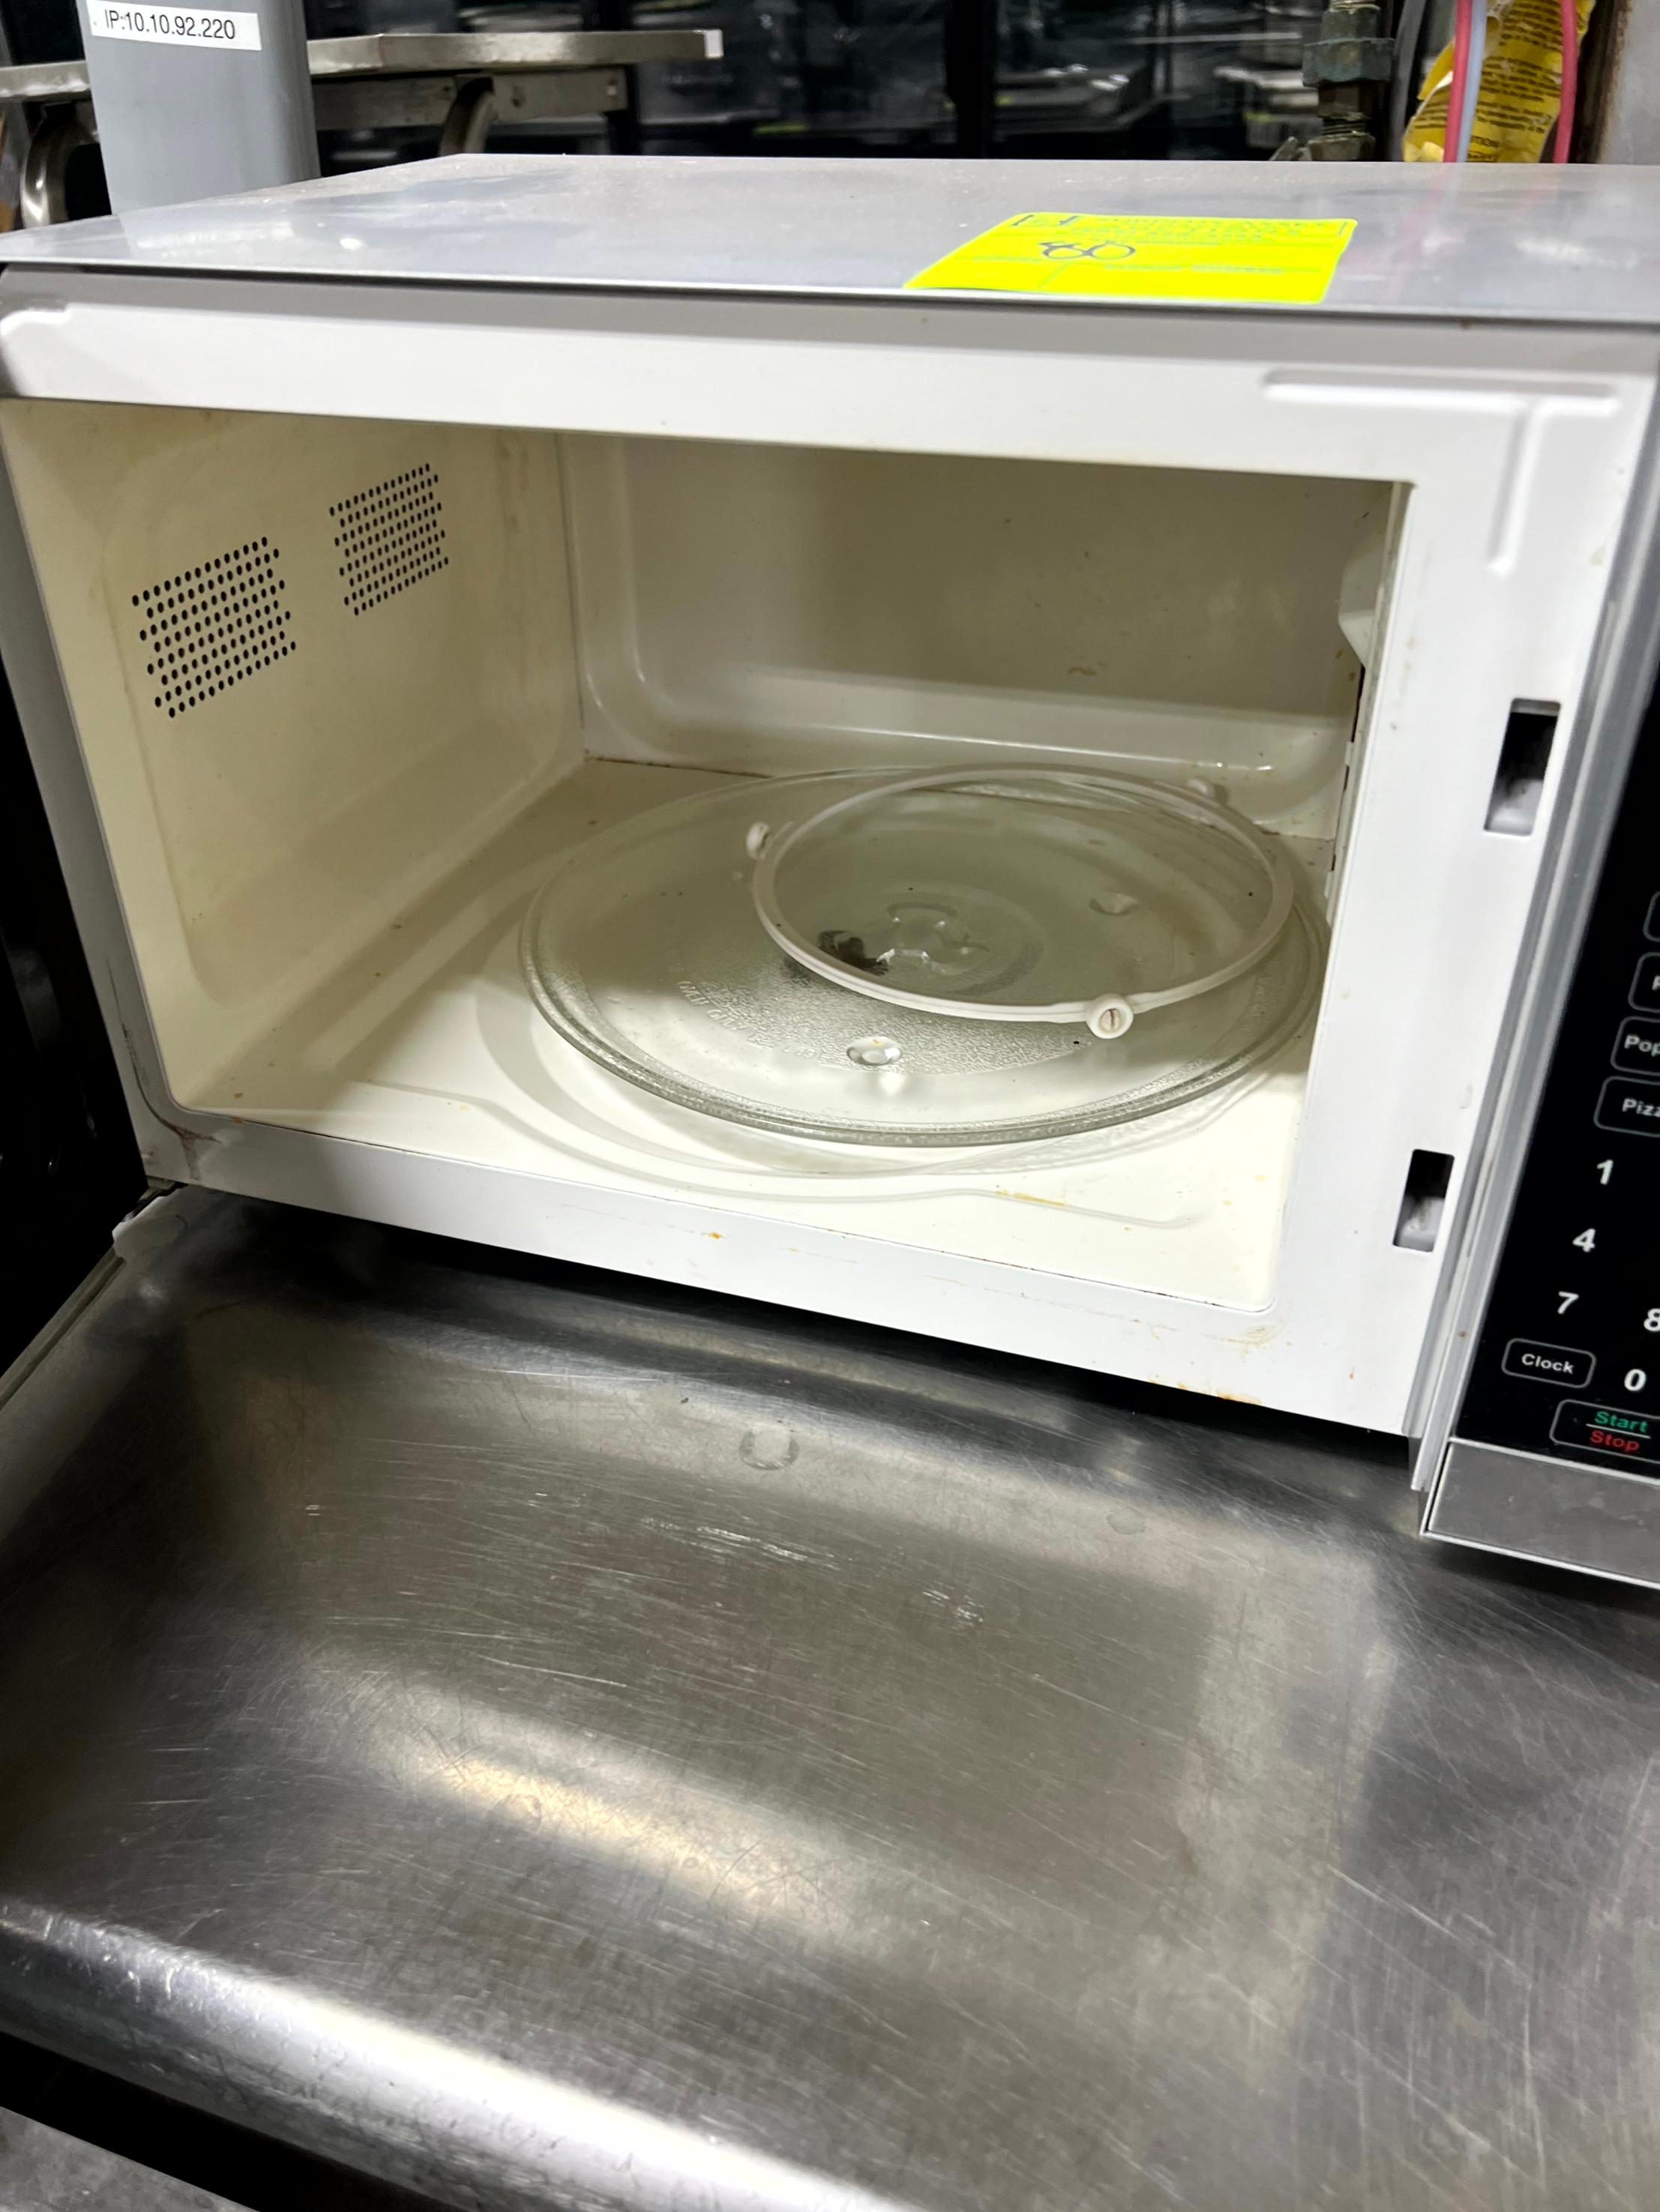 Haier Household Microwave